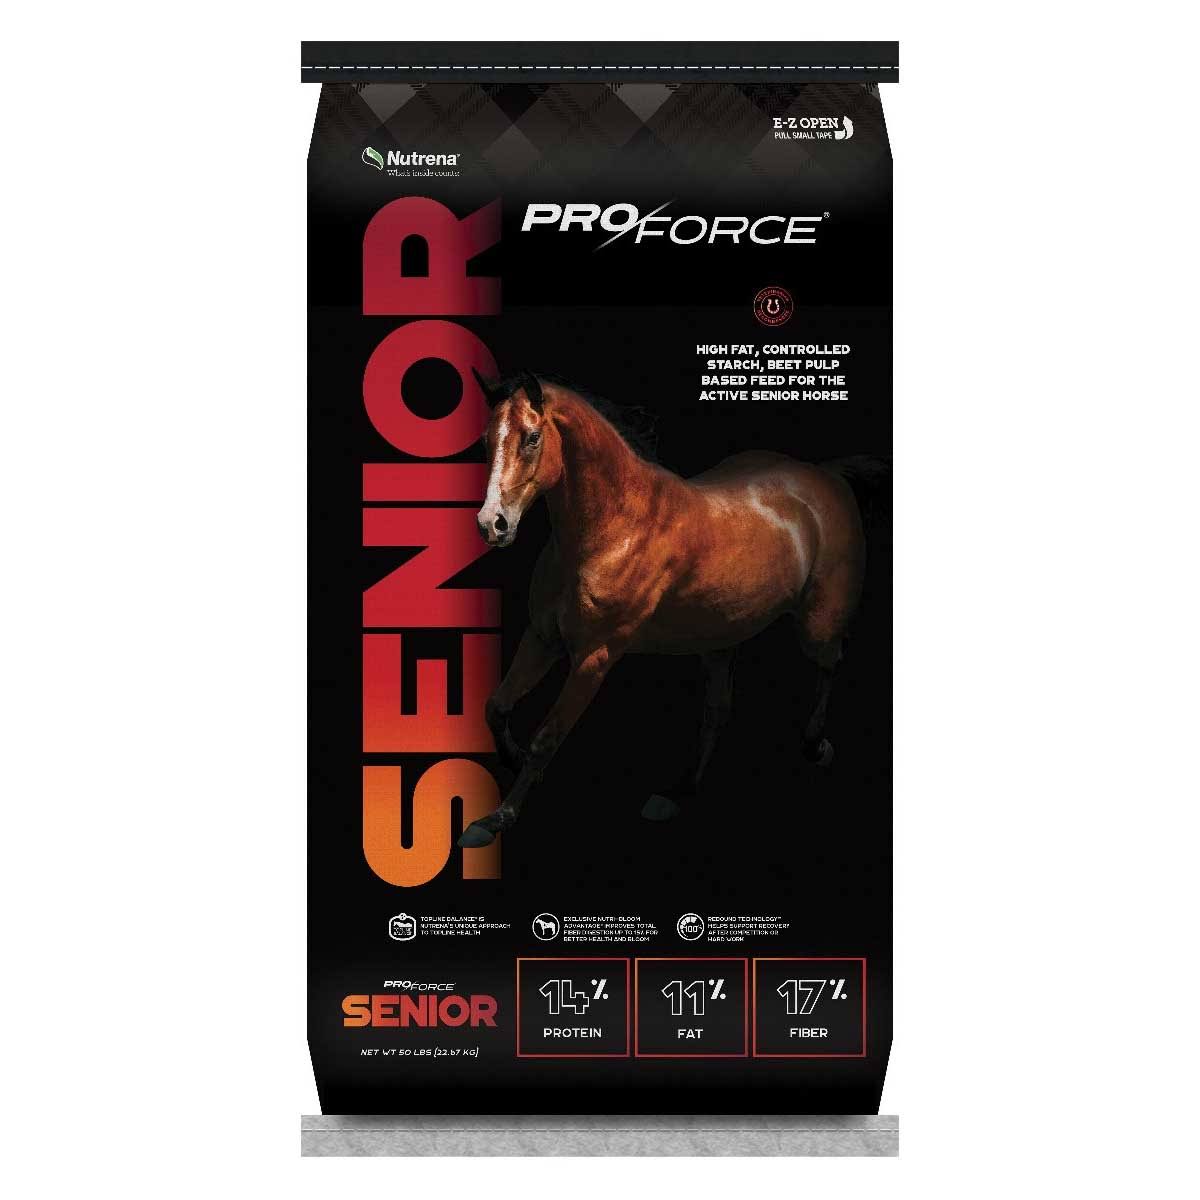 Nutrena 94202 Animal Health Supplies 50 lbs. Package ProForce Senior Horse Feed